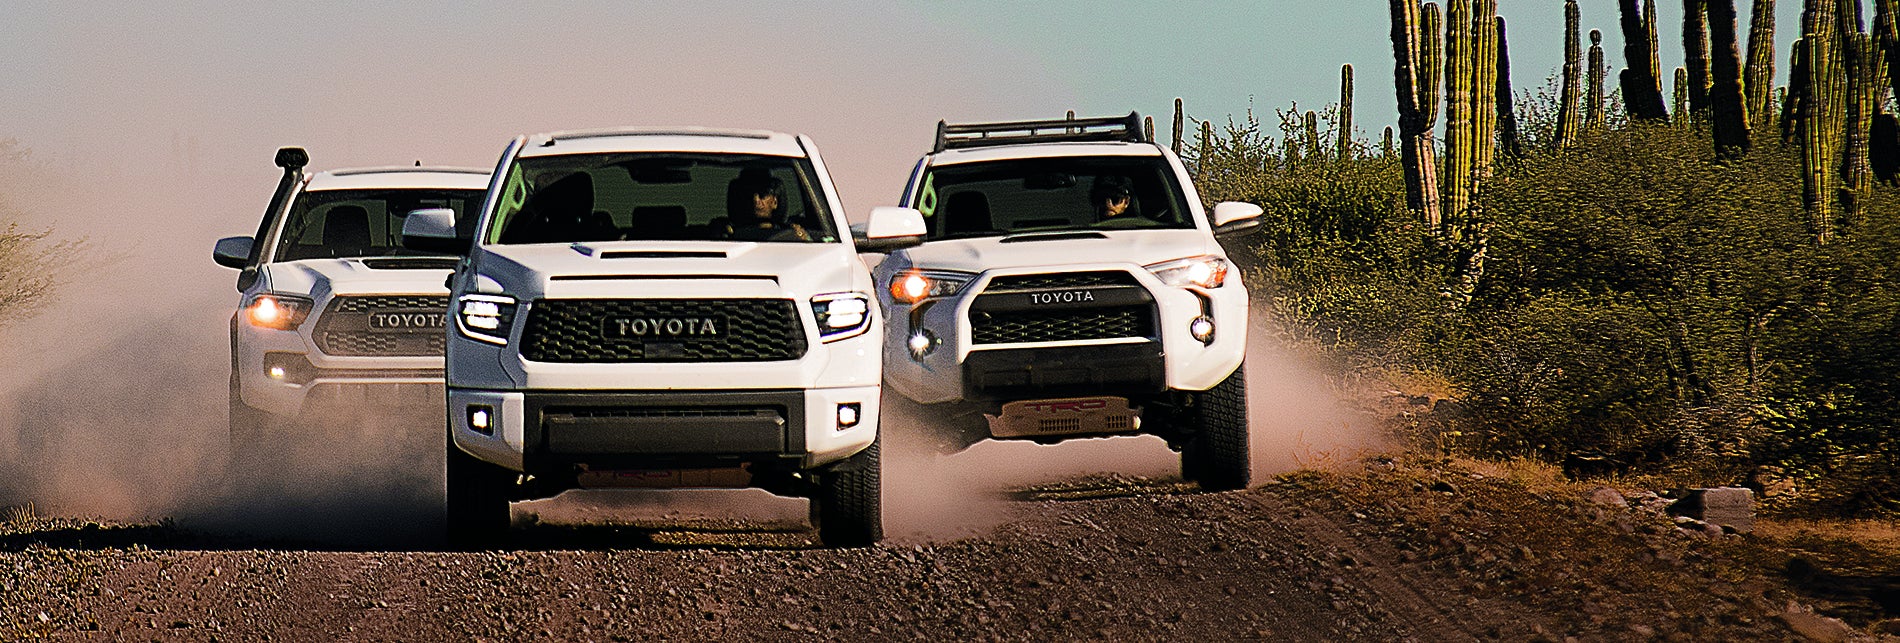 Toyota Dealerships Wyoming near me